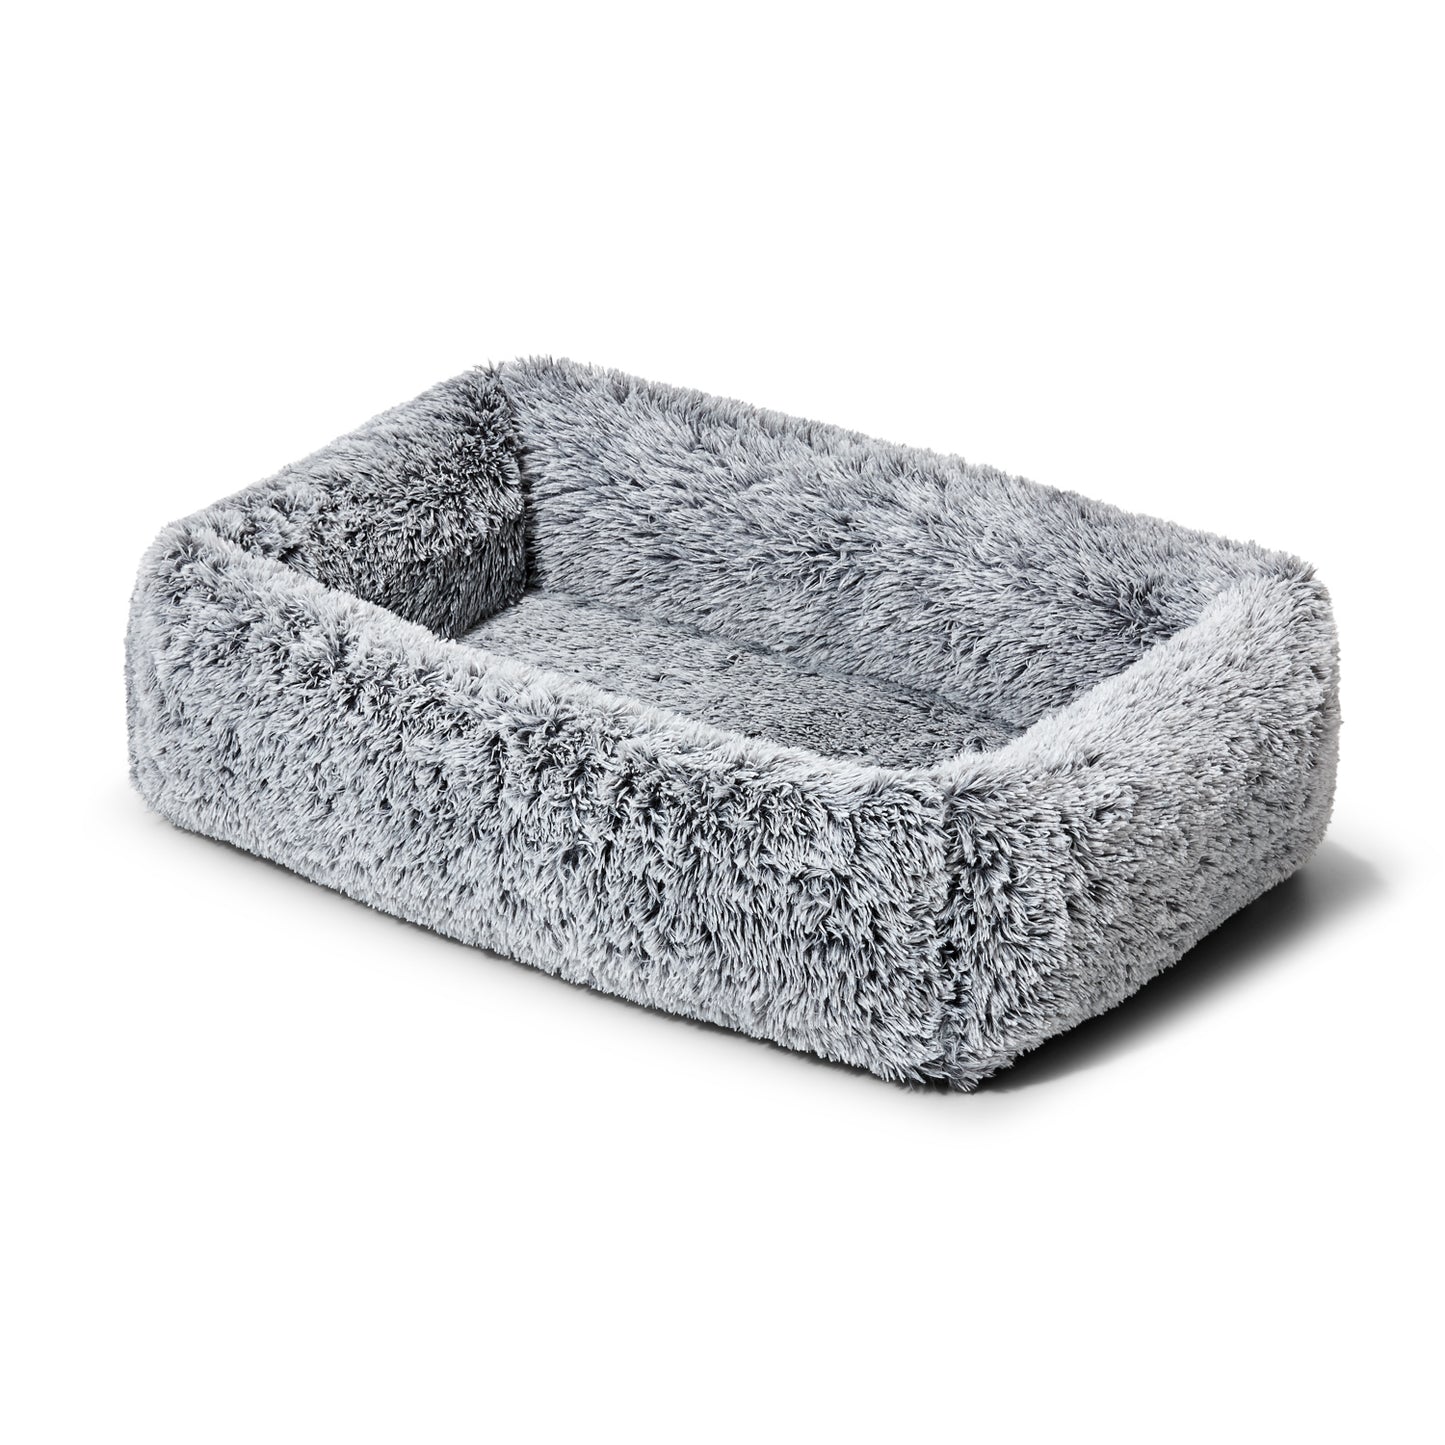 Snooza Snuggler Silver Fox Dog Bed